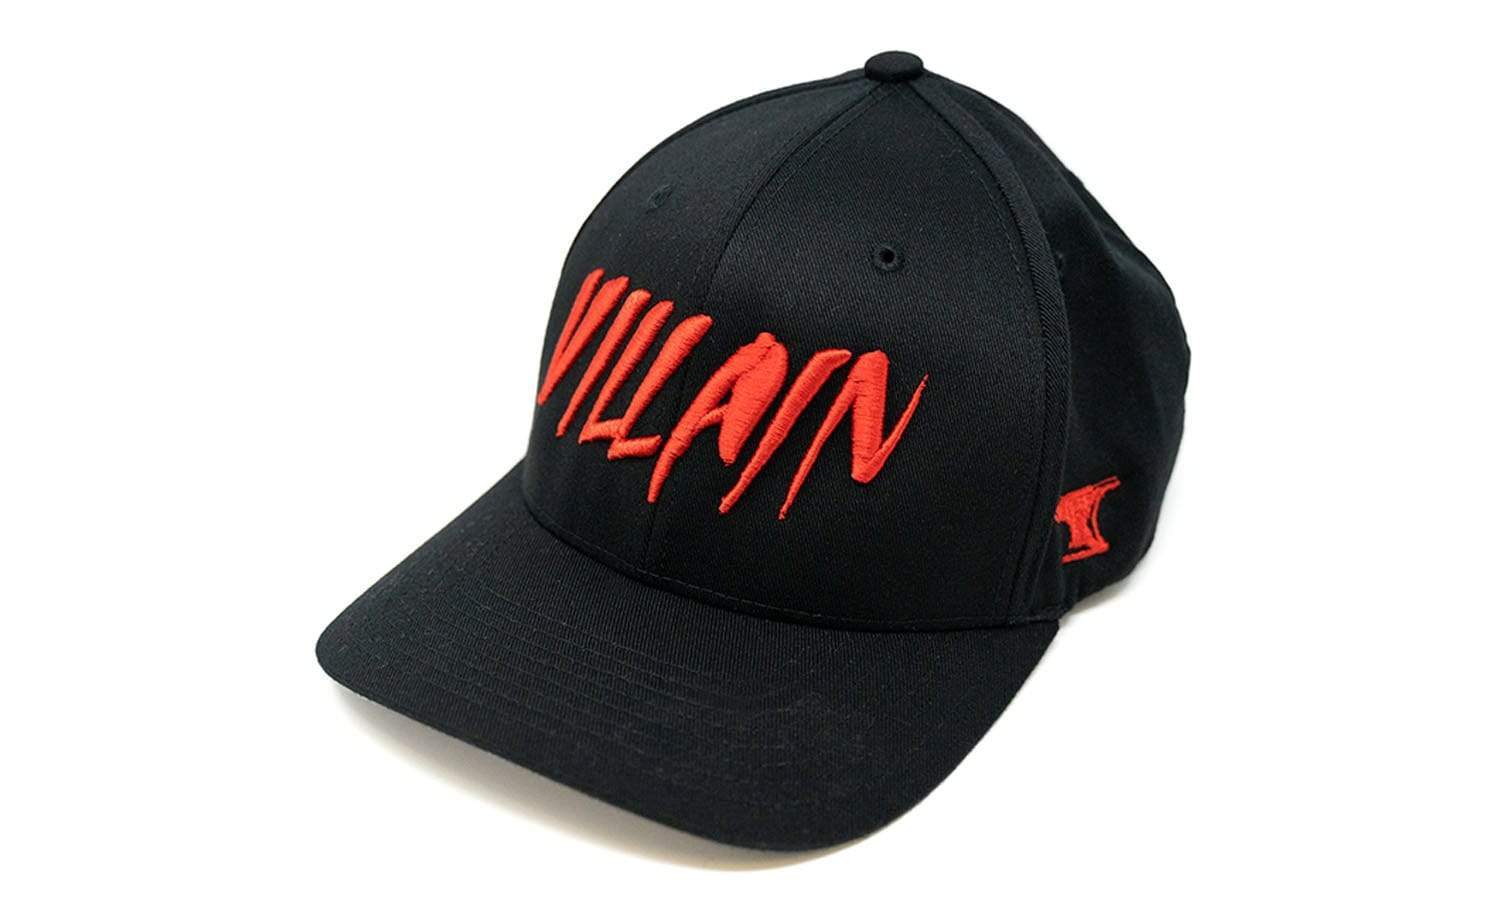 Villain (Red) Hat Black Flexfit